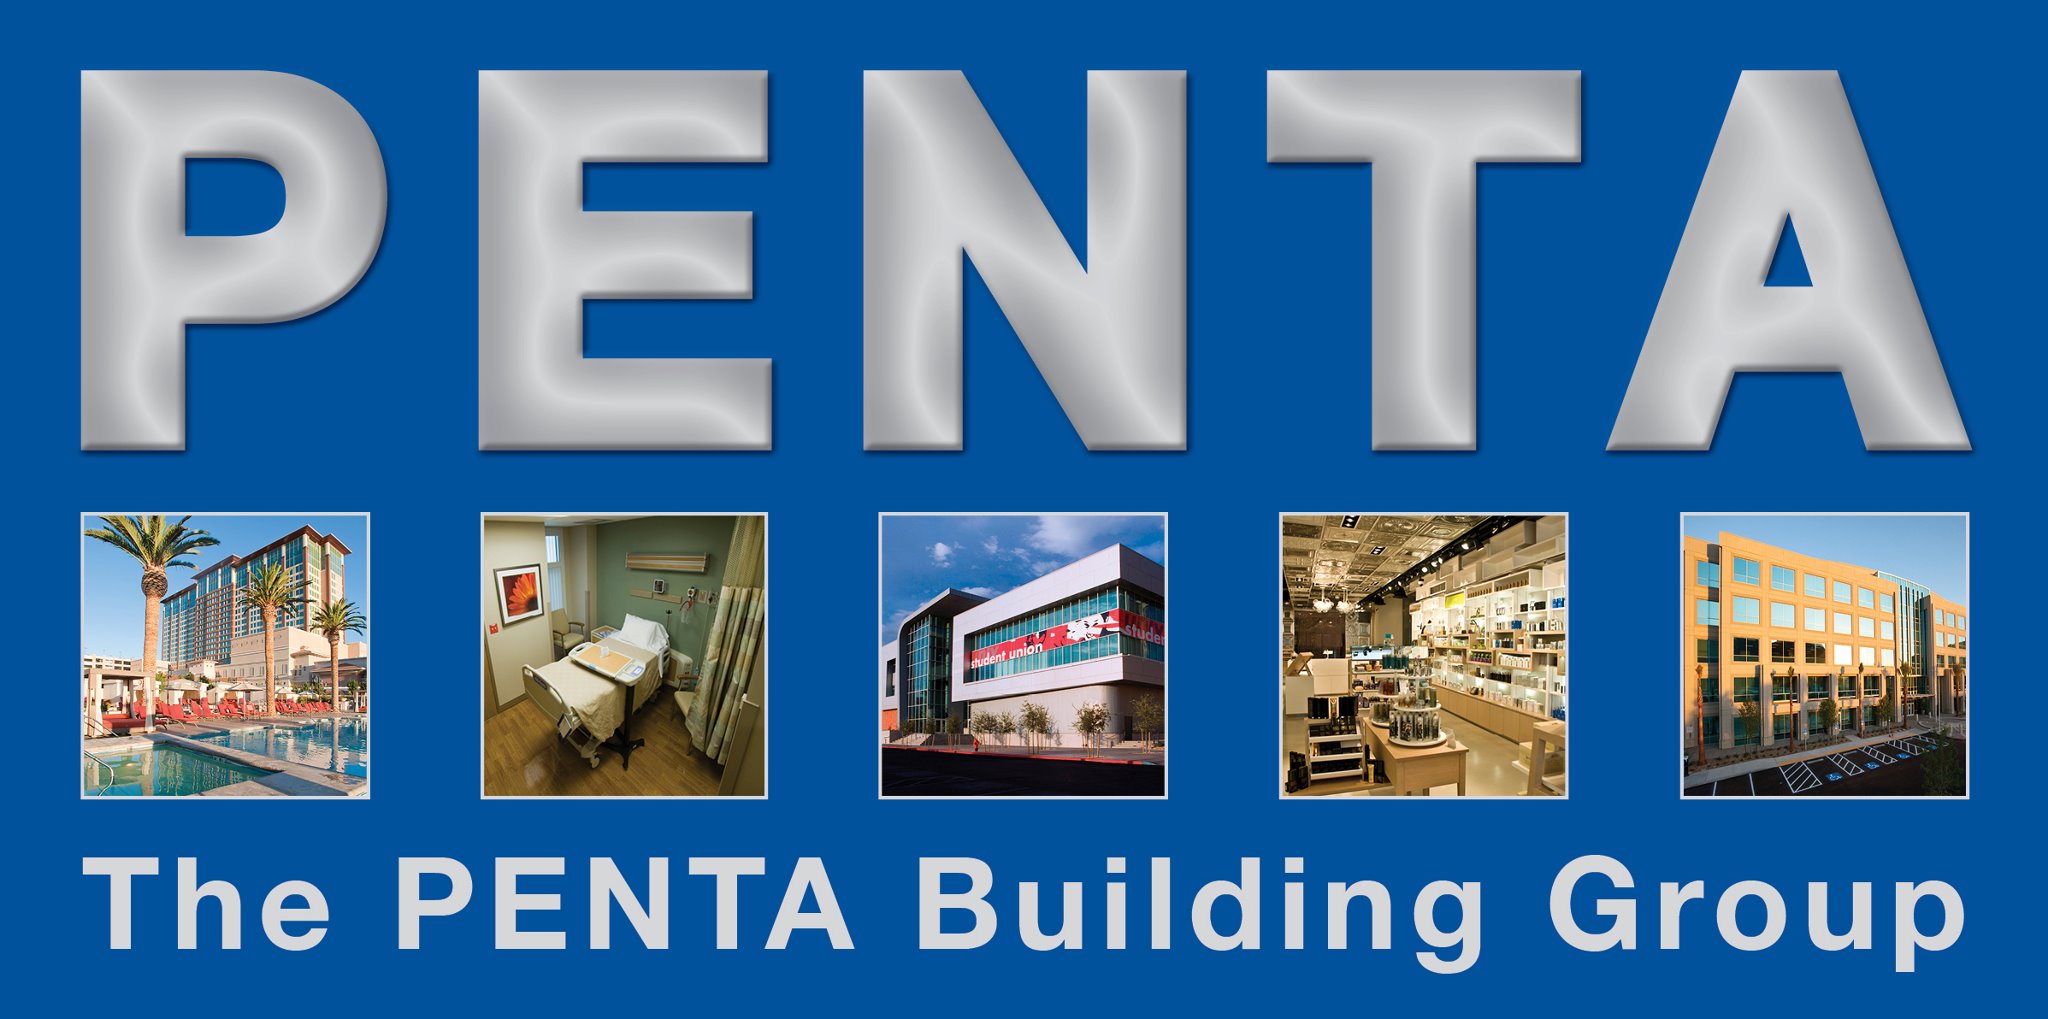 Penta Building Group